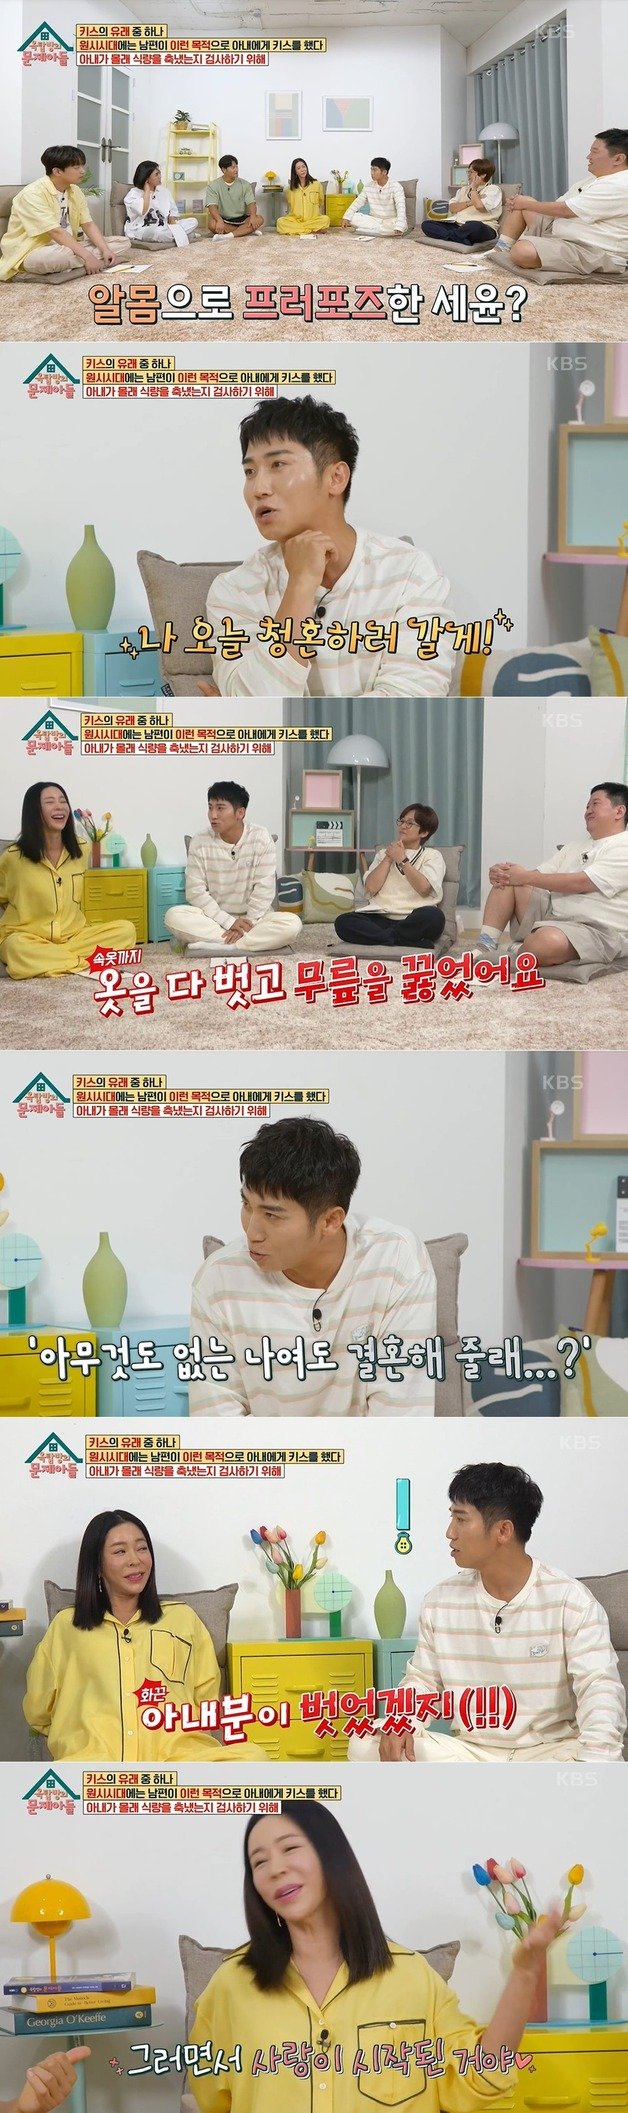 KBS 2TV ‘옥탑방의 문제아들’ 방송 화면 갈무리